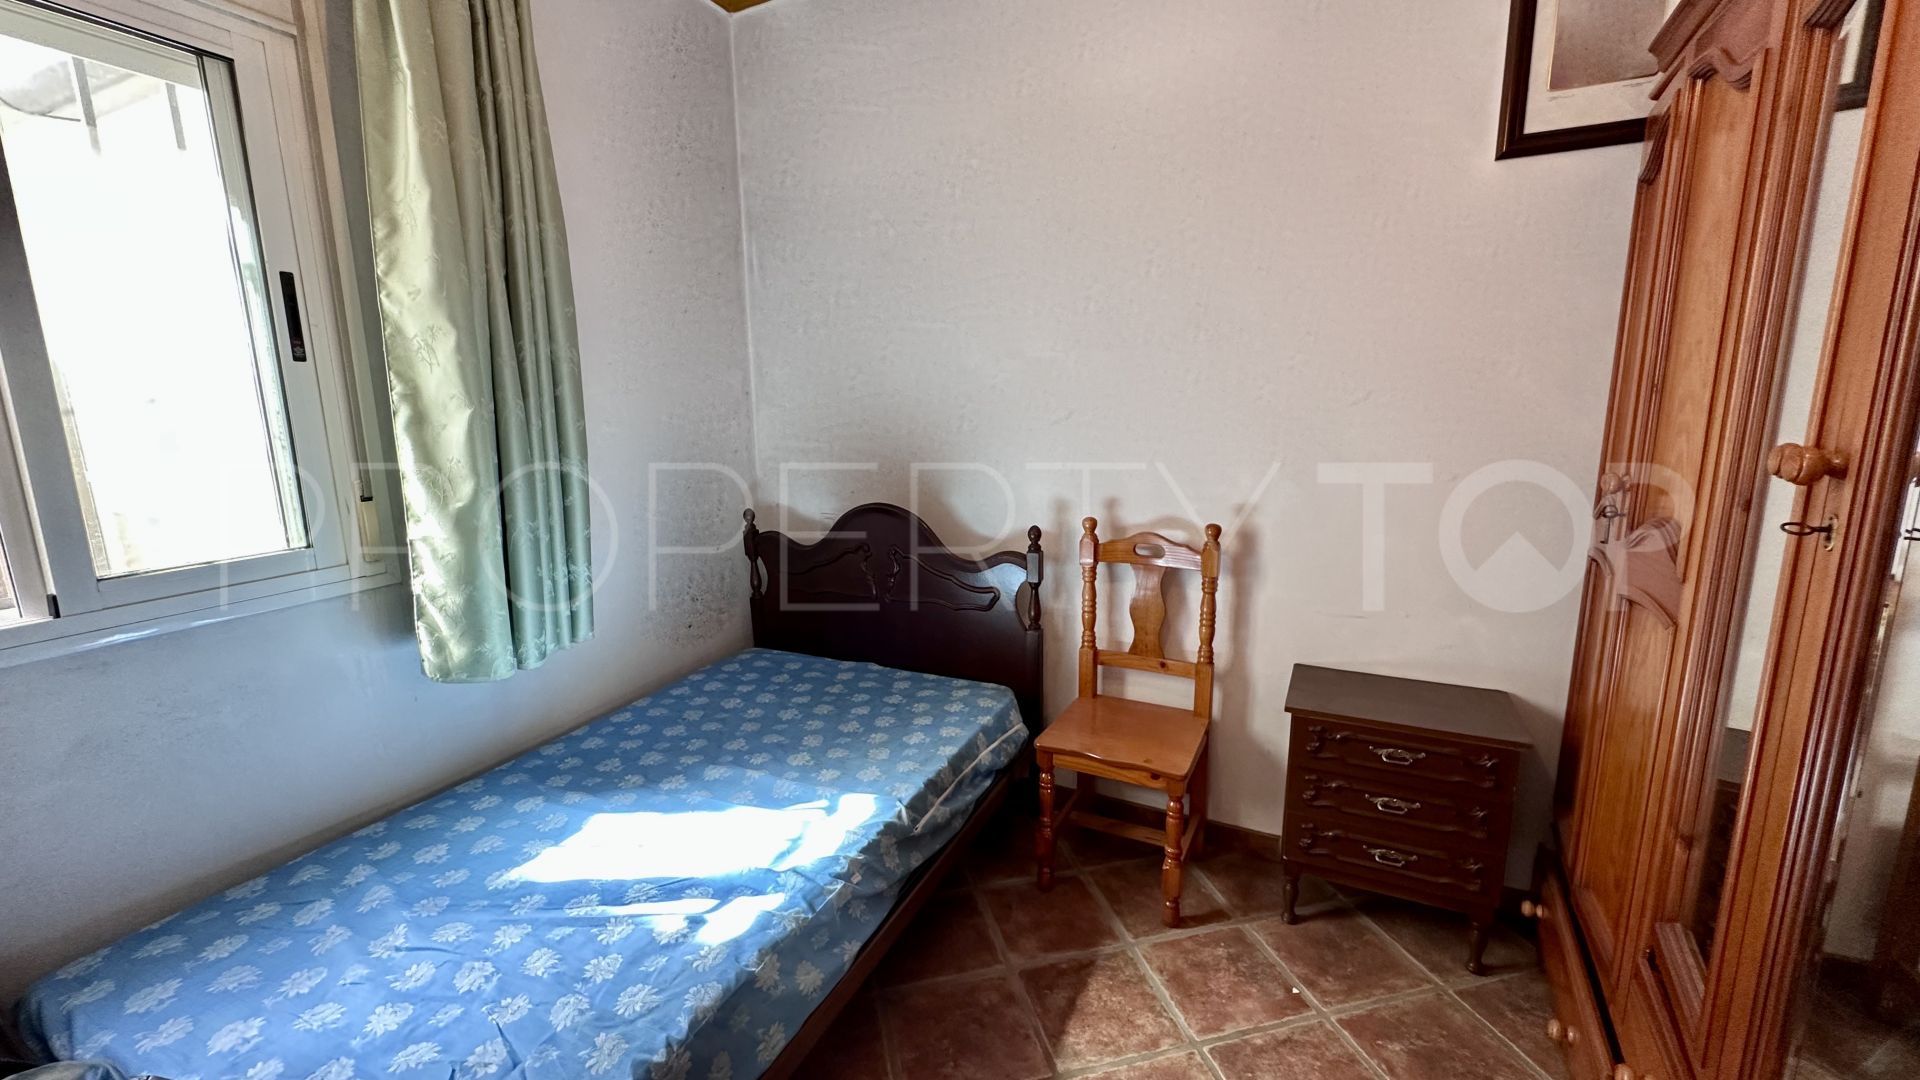 For sale town house in Setenil de las Bodegas with 2 bedrooms